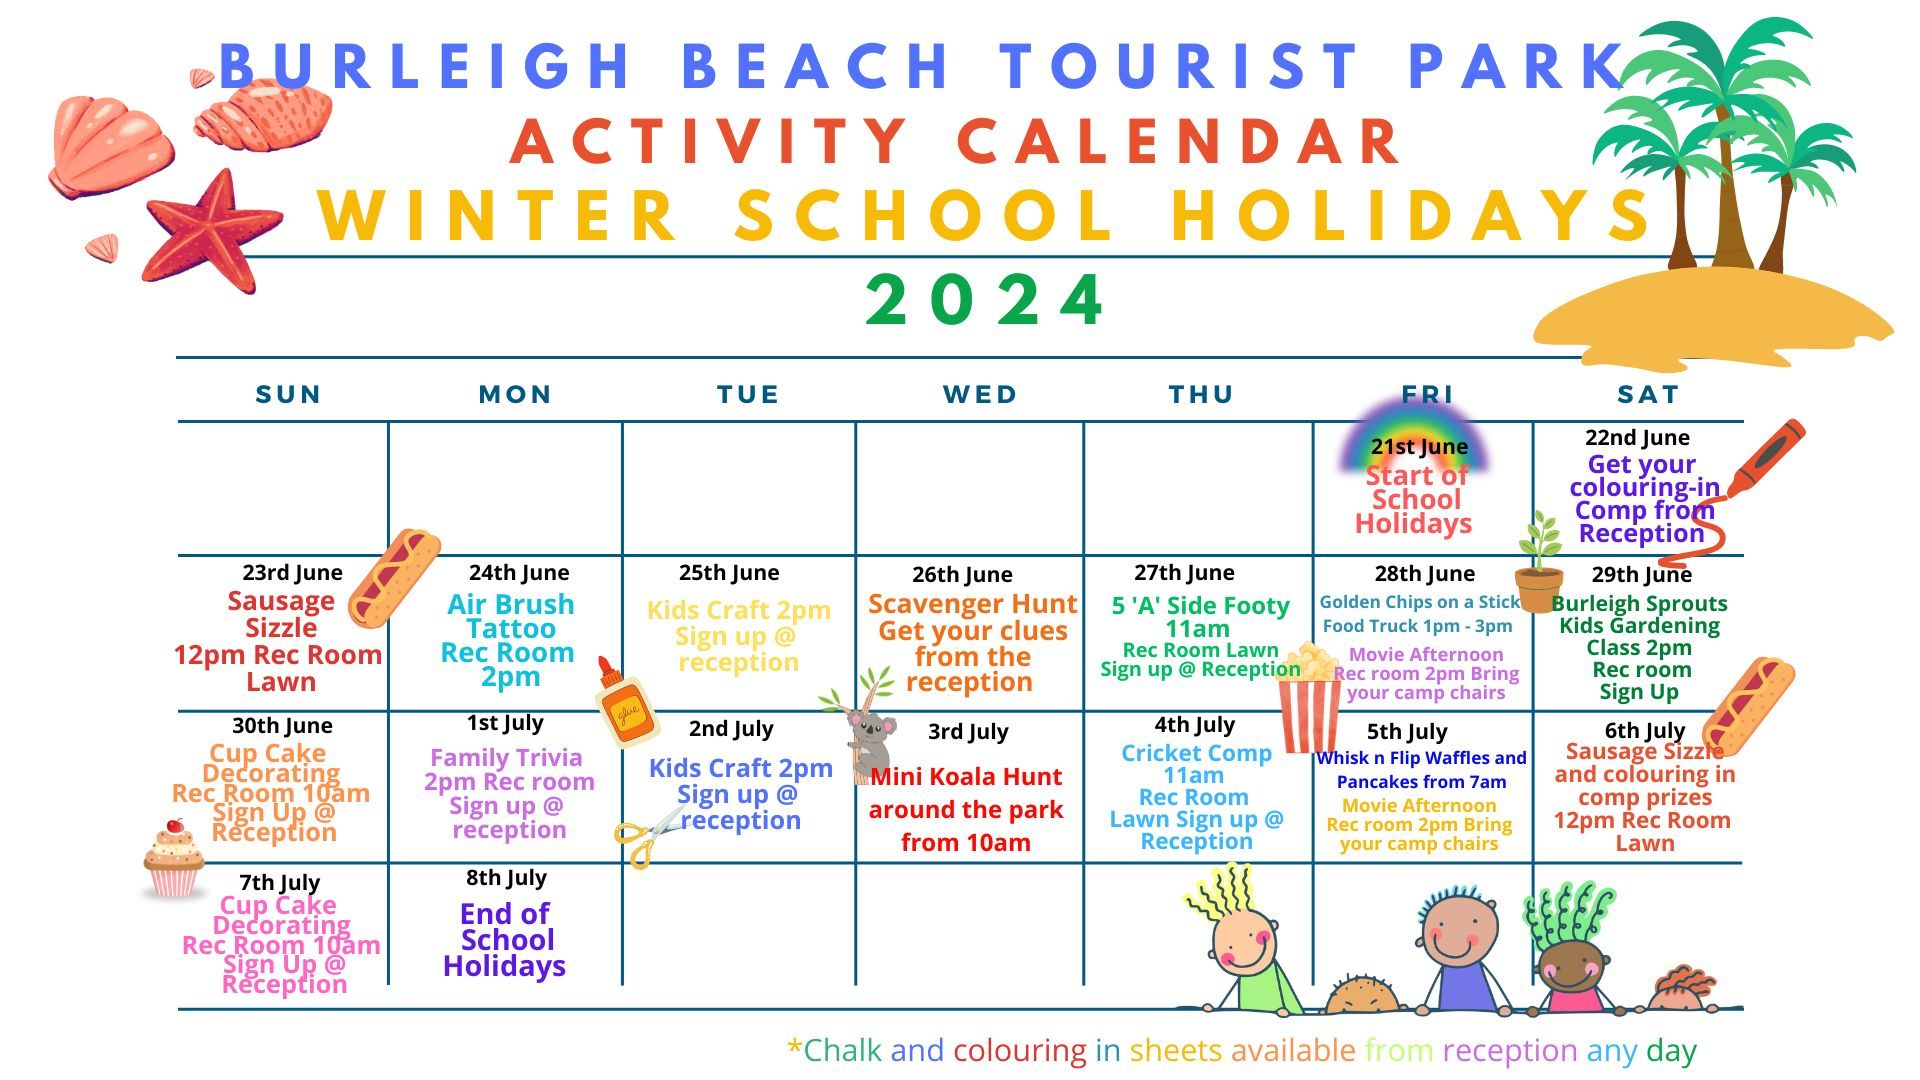 An image of the Burleigh Beach Tourist Park Activity Planner 2024